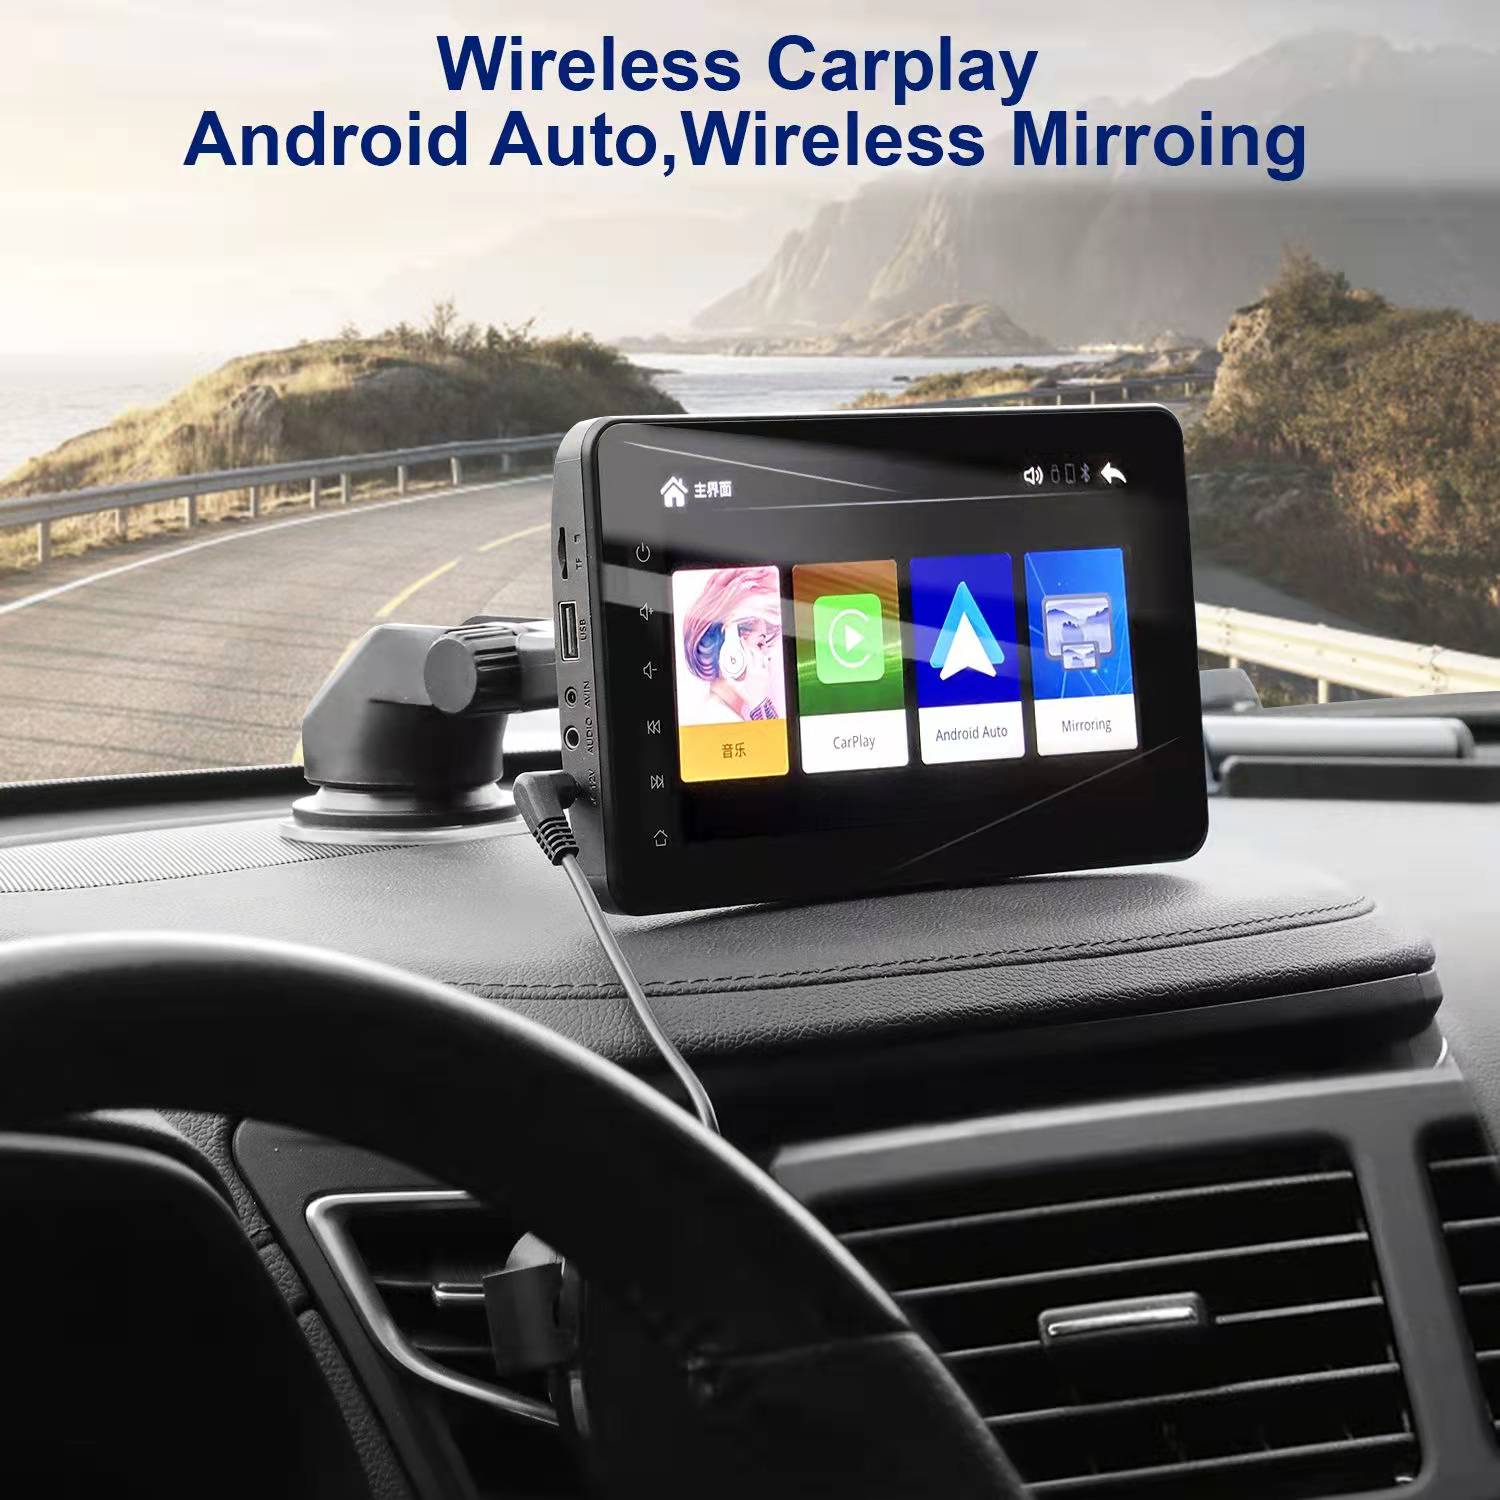 Portable-Apple-Carplay-Wireless-7-Inch-Car-Monitor-LCD-Screen-Mirror-Link-Multimedia-Video-Players (2)